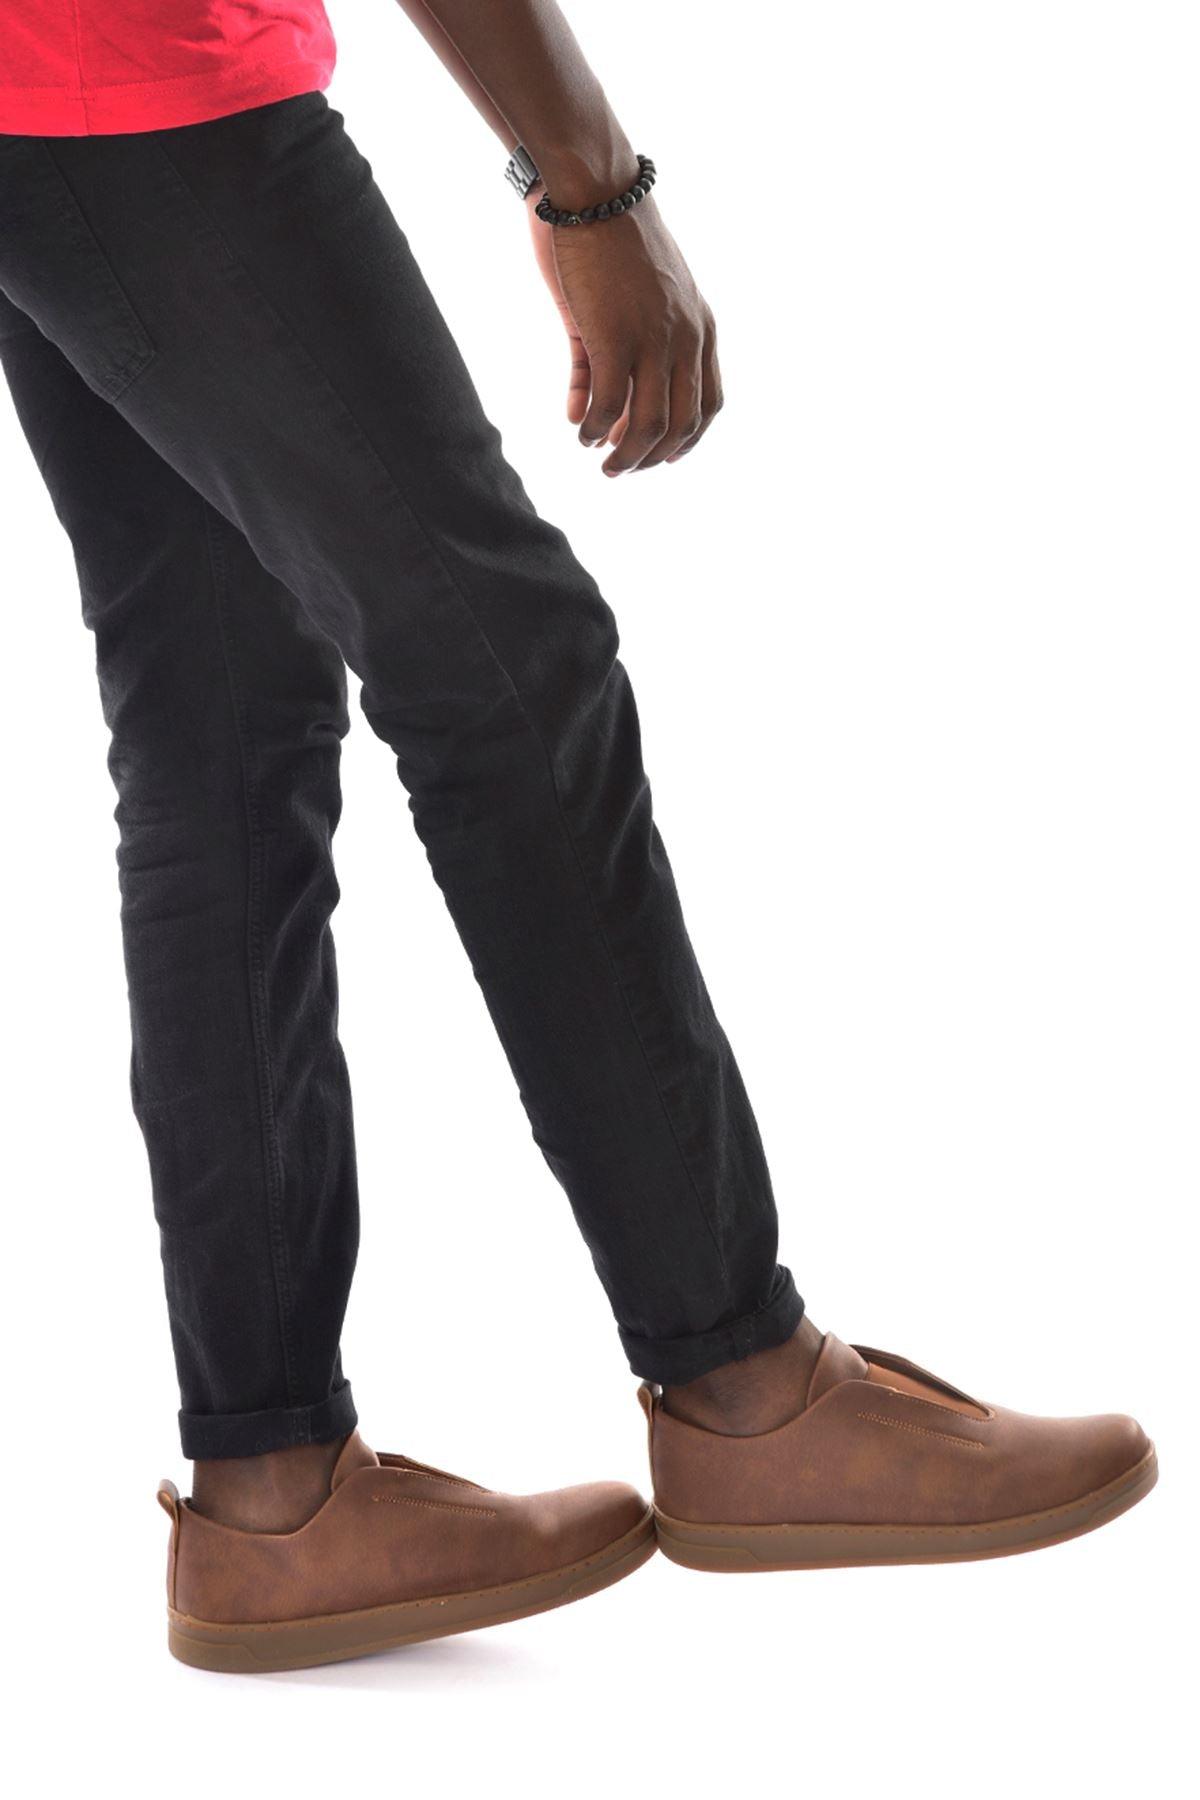 CH195 İpekyol KT Men's Shoes Sneakers Brown - STREET MODE ™